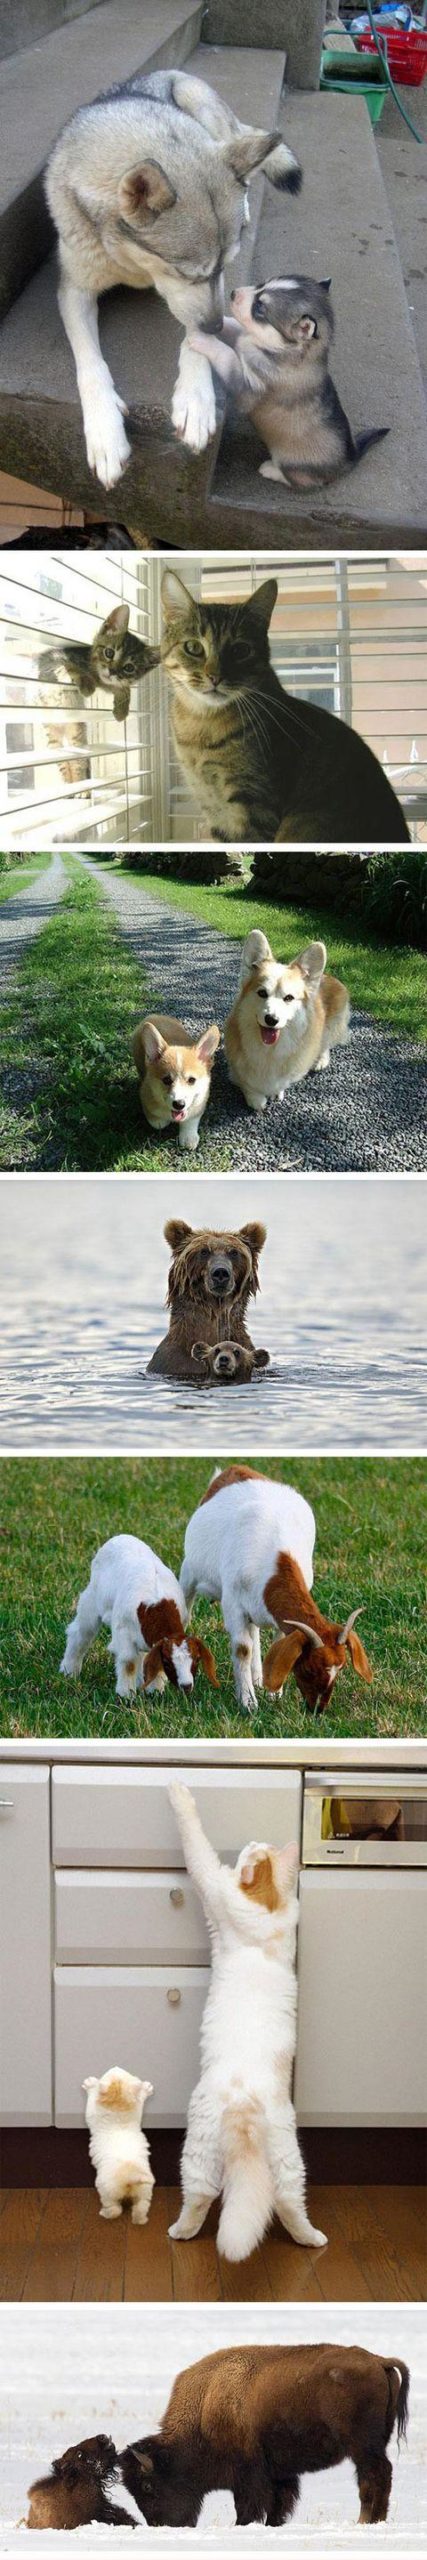 Cute+animals+and+mini+versions